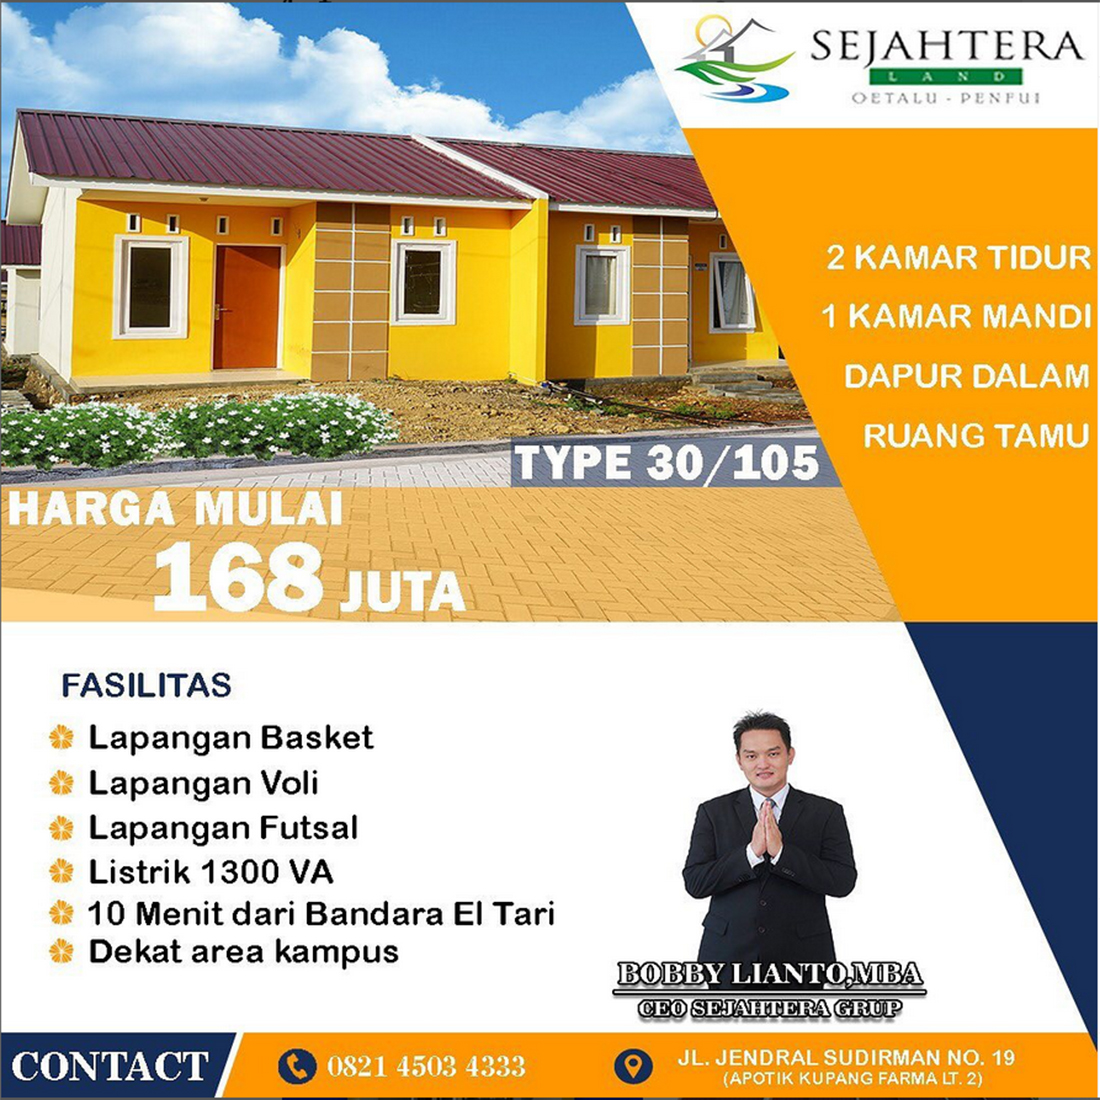 myKupang Sejahtera Land Oetalu estate broshure Facilities